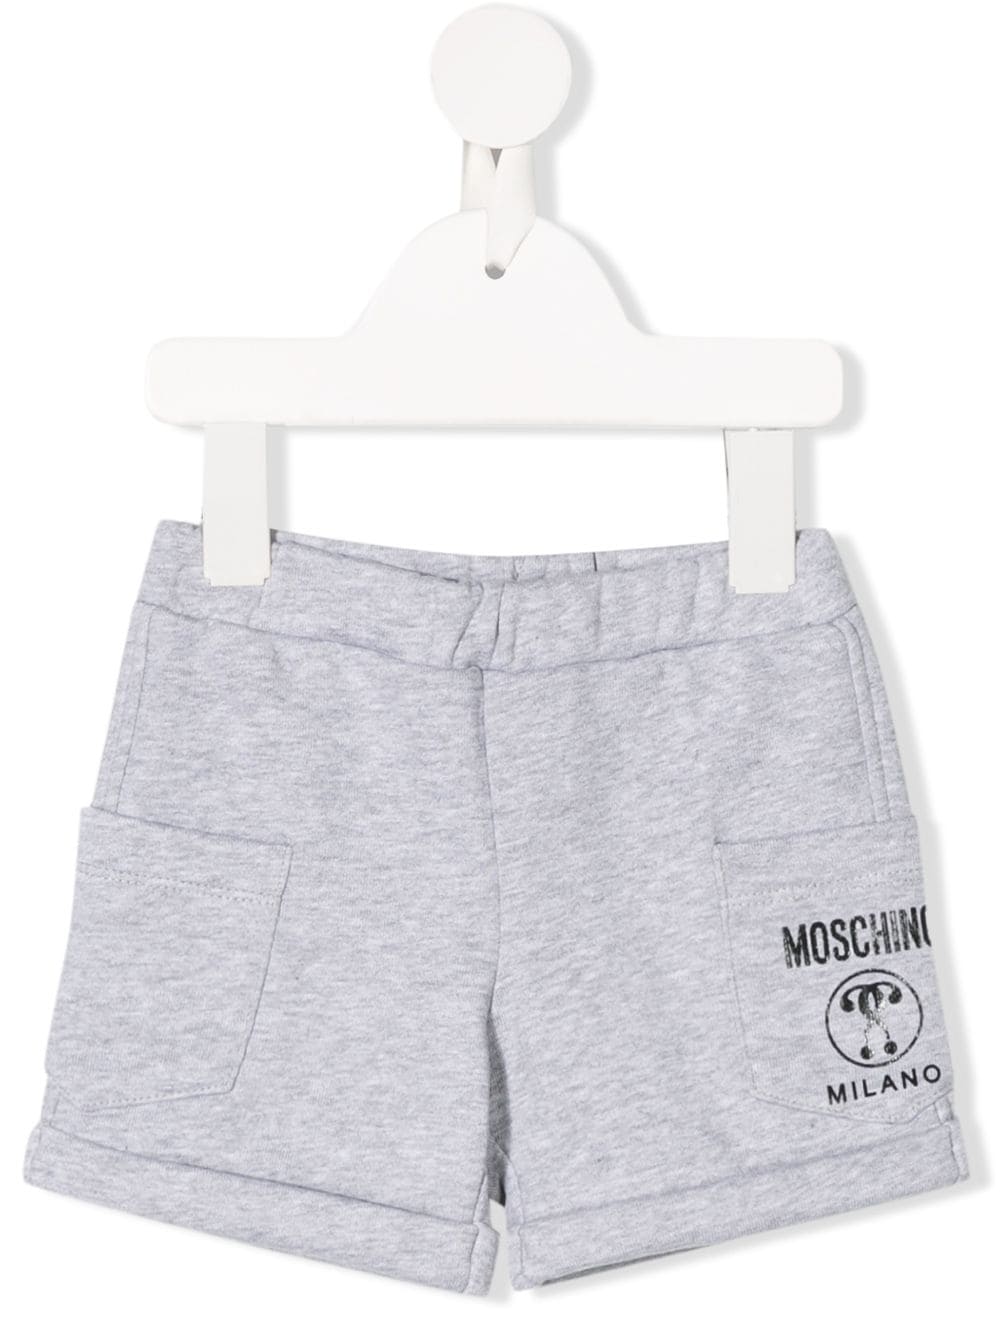 фото Moschino kids облегающие шорты с логотипом